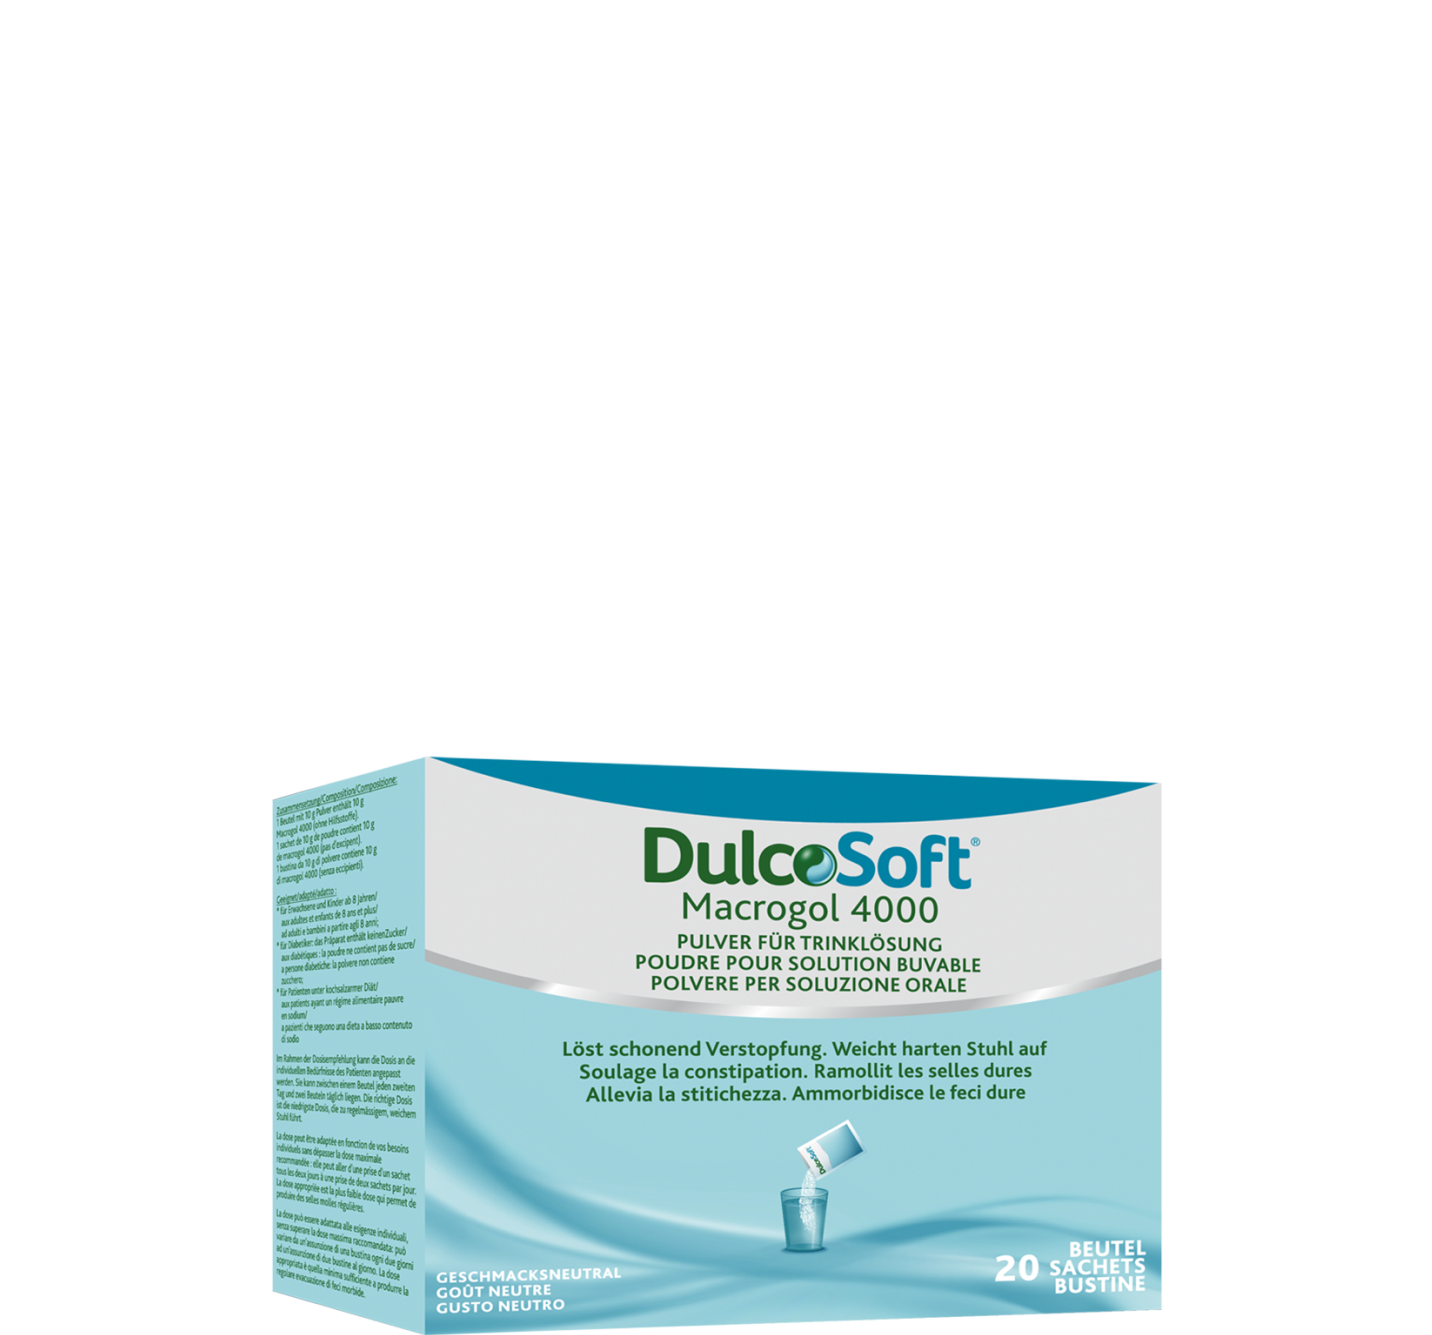 Dulcosoft Packshot